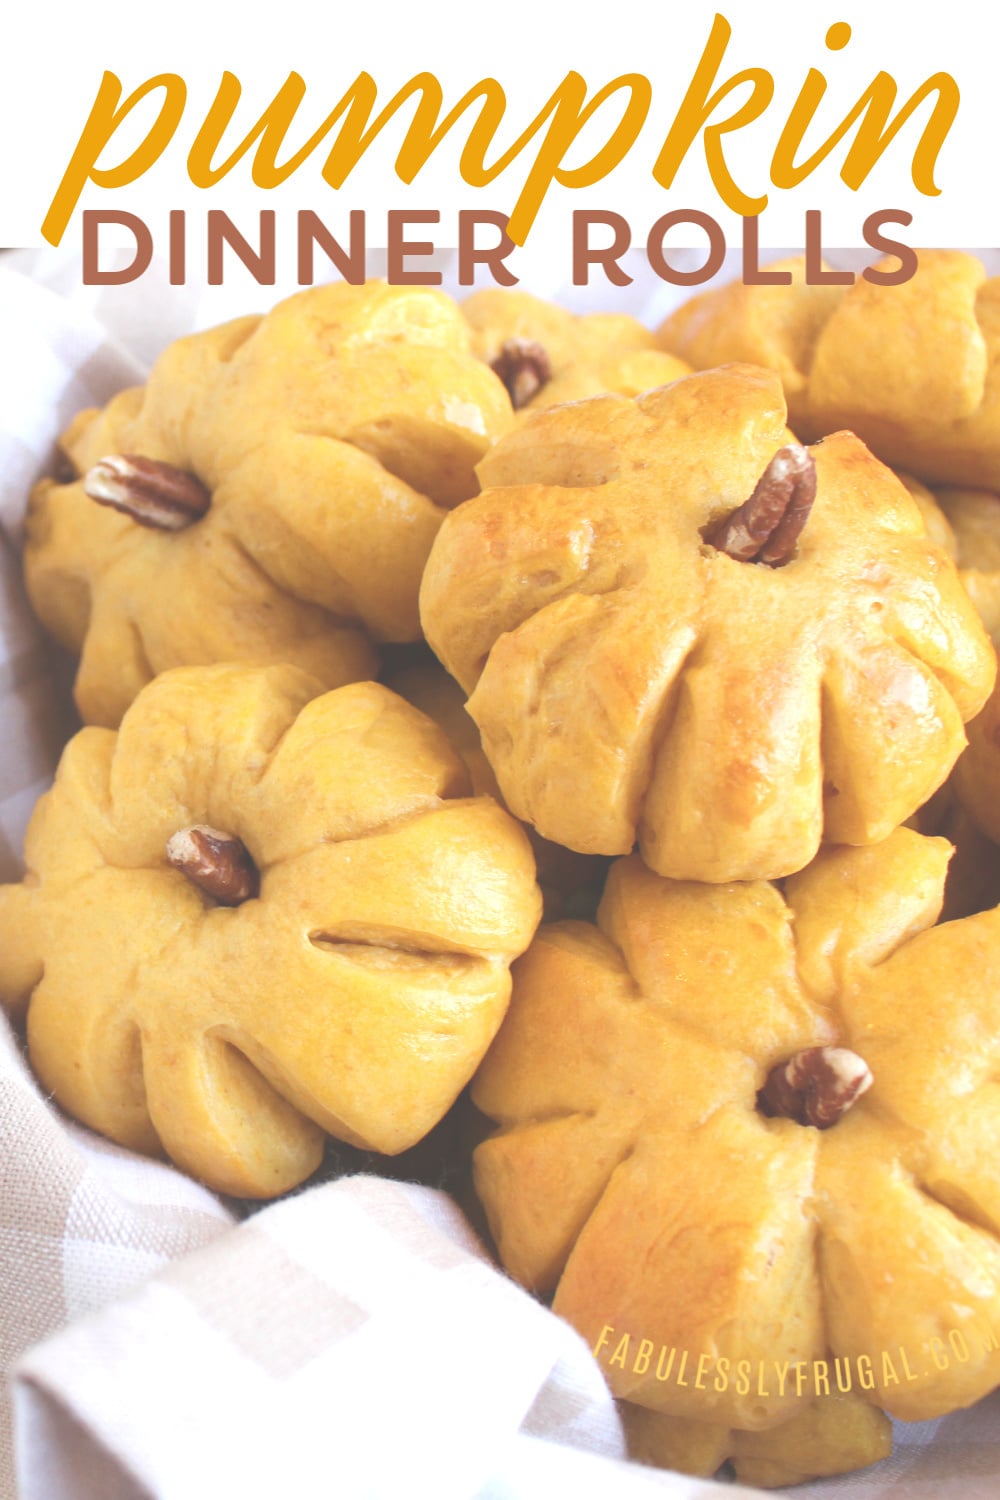 Pumpkin dinner rolls recipe